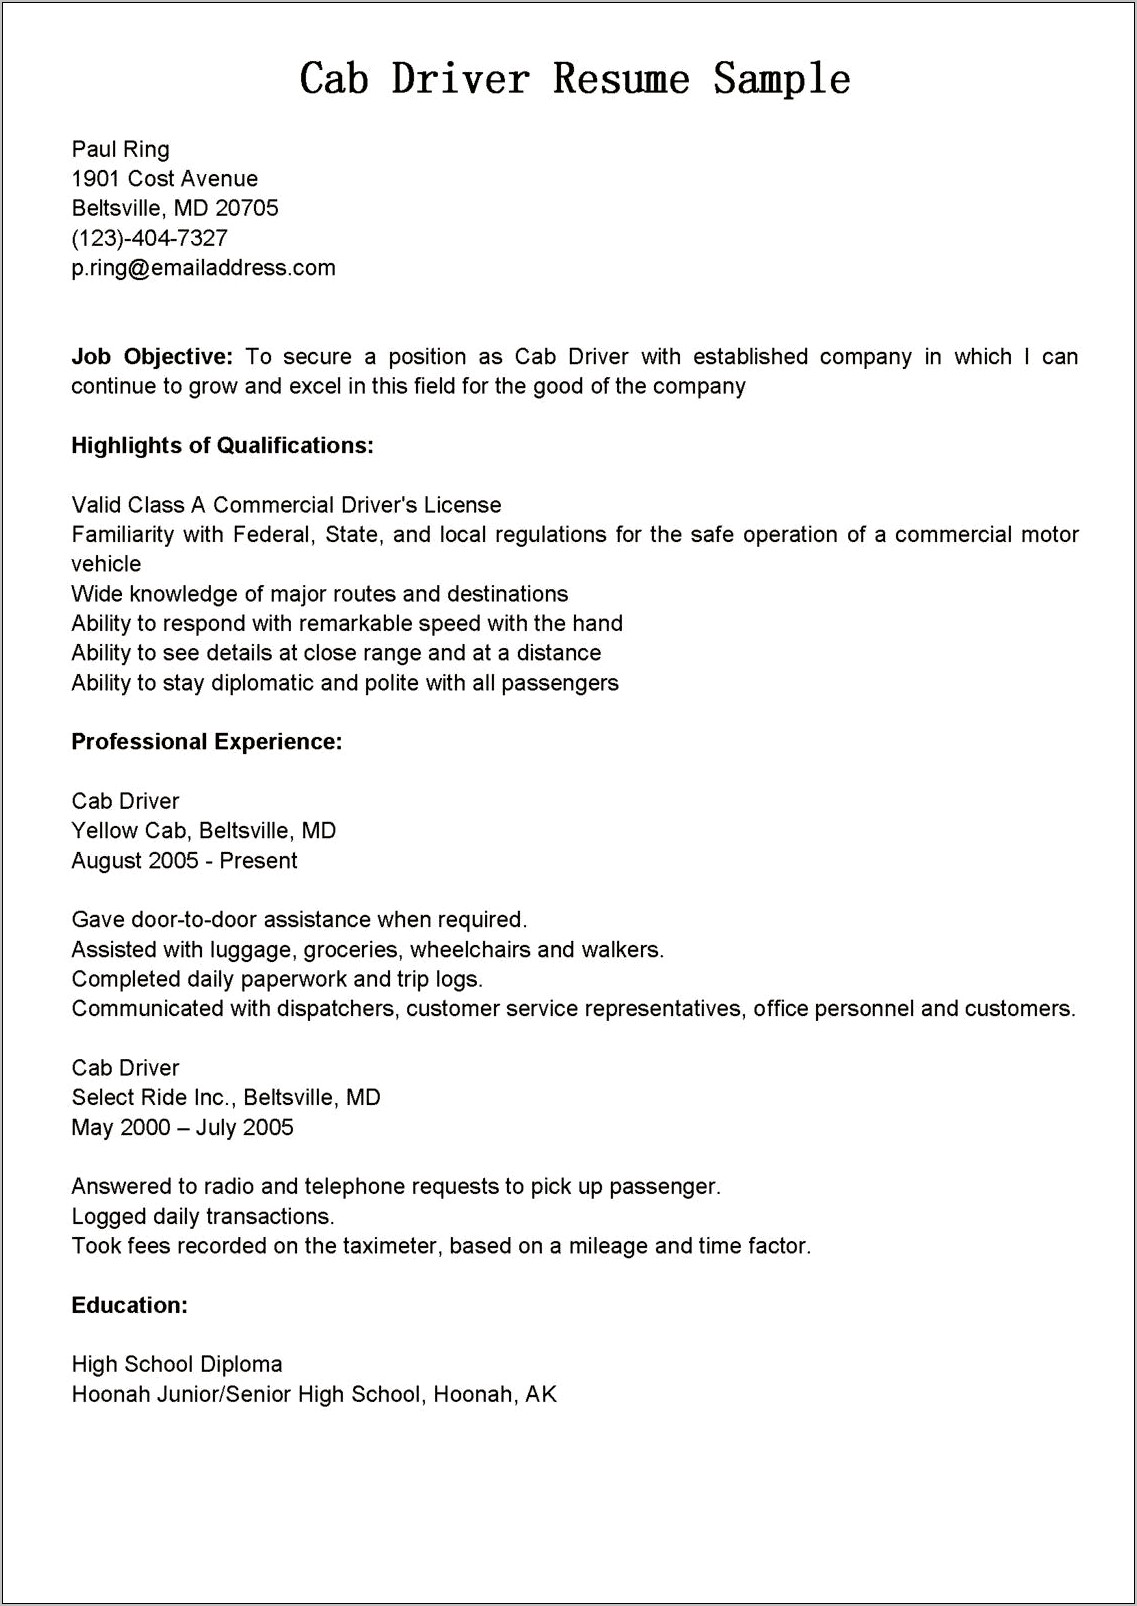 Resume Job Description For Taxi Driver